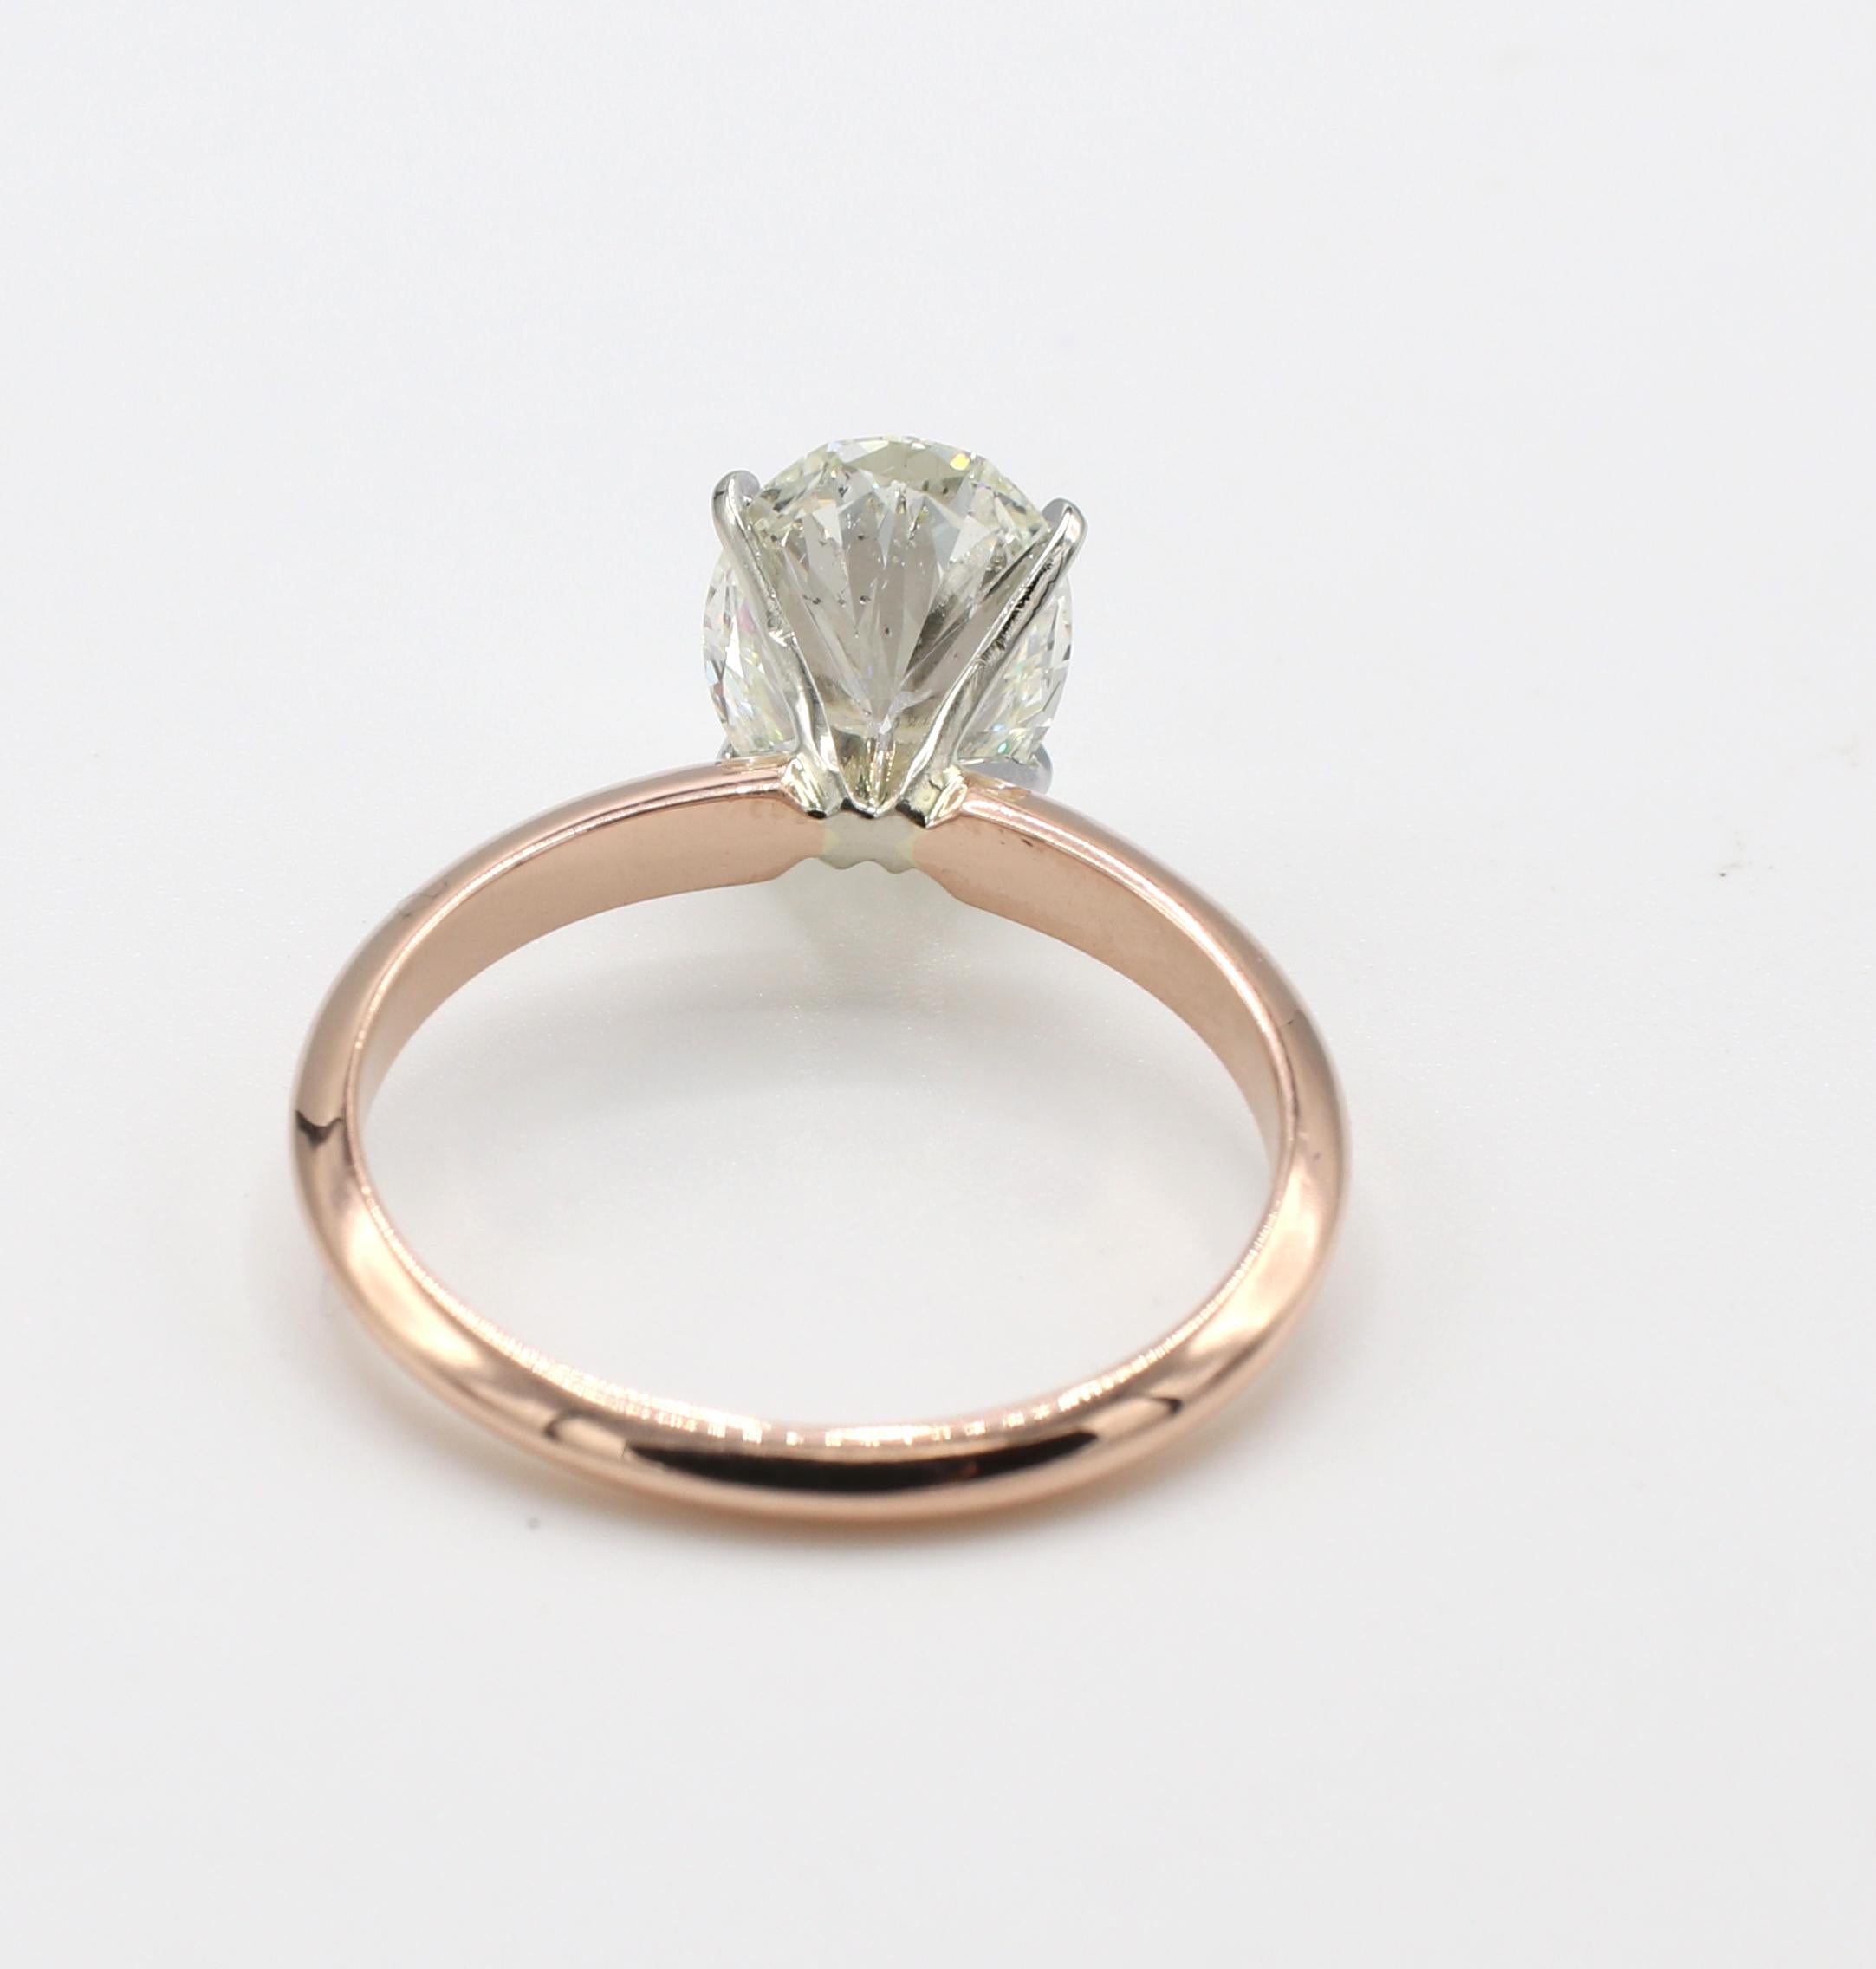 1.74 carat diamond ring